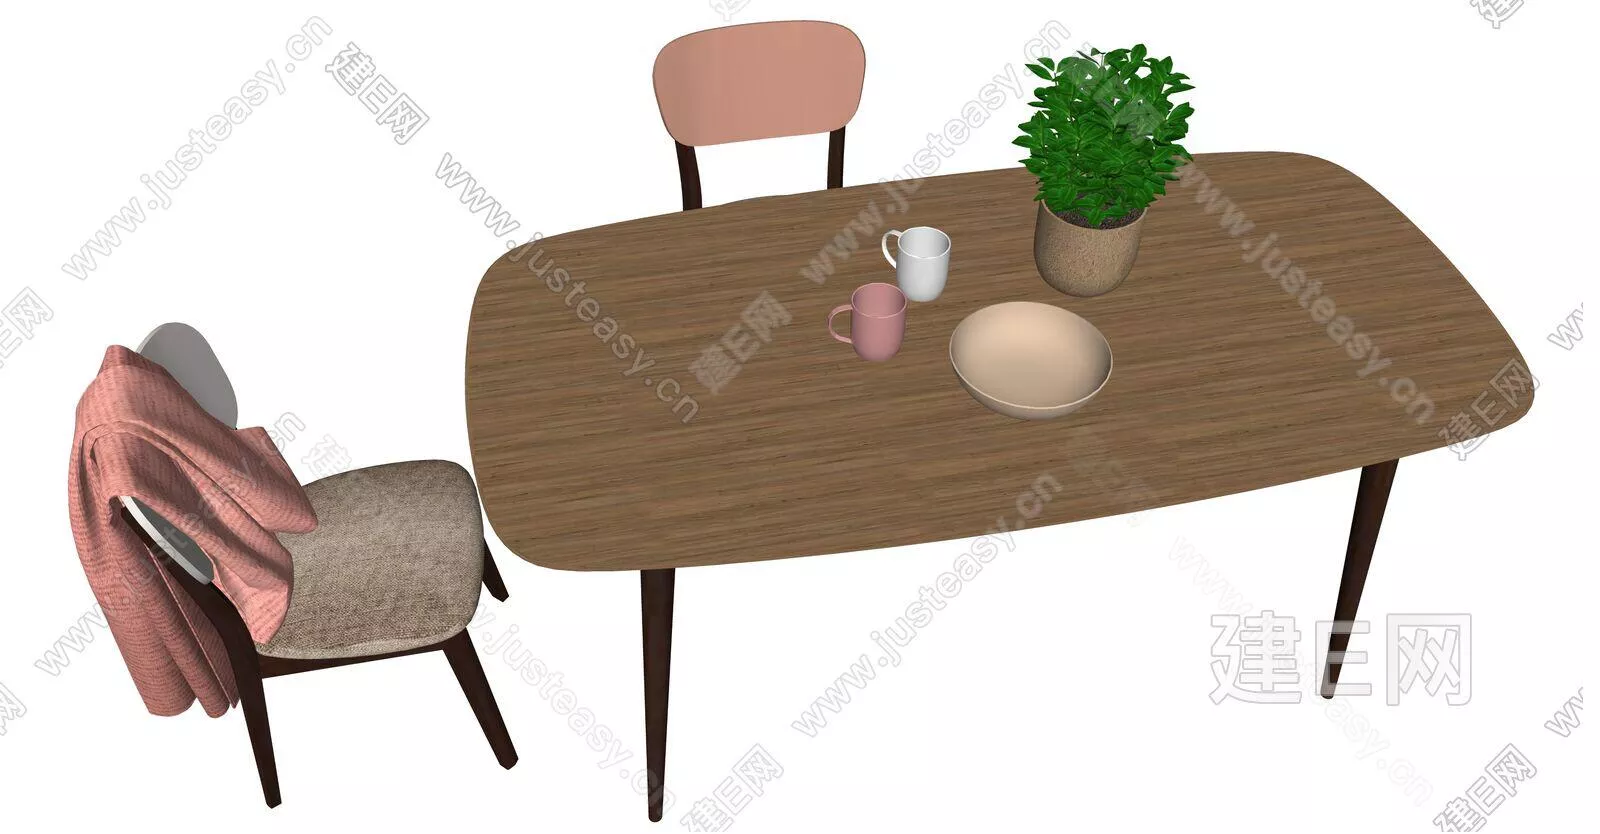 MODERN DINING TABLE SET - SKETCHUP 3D MODEL - VRAY OR ENSCAPE - 112214387